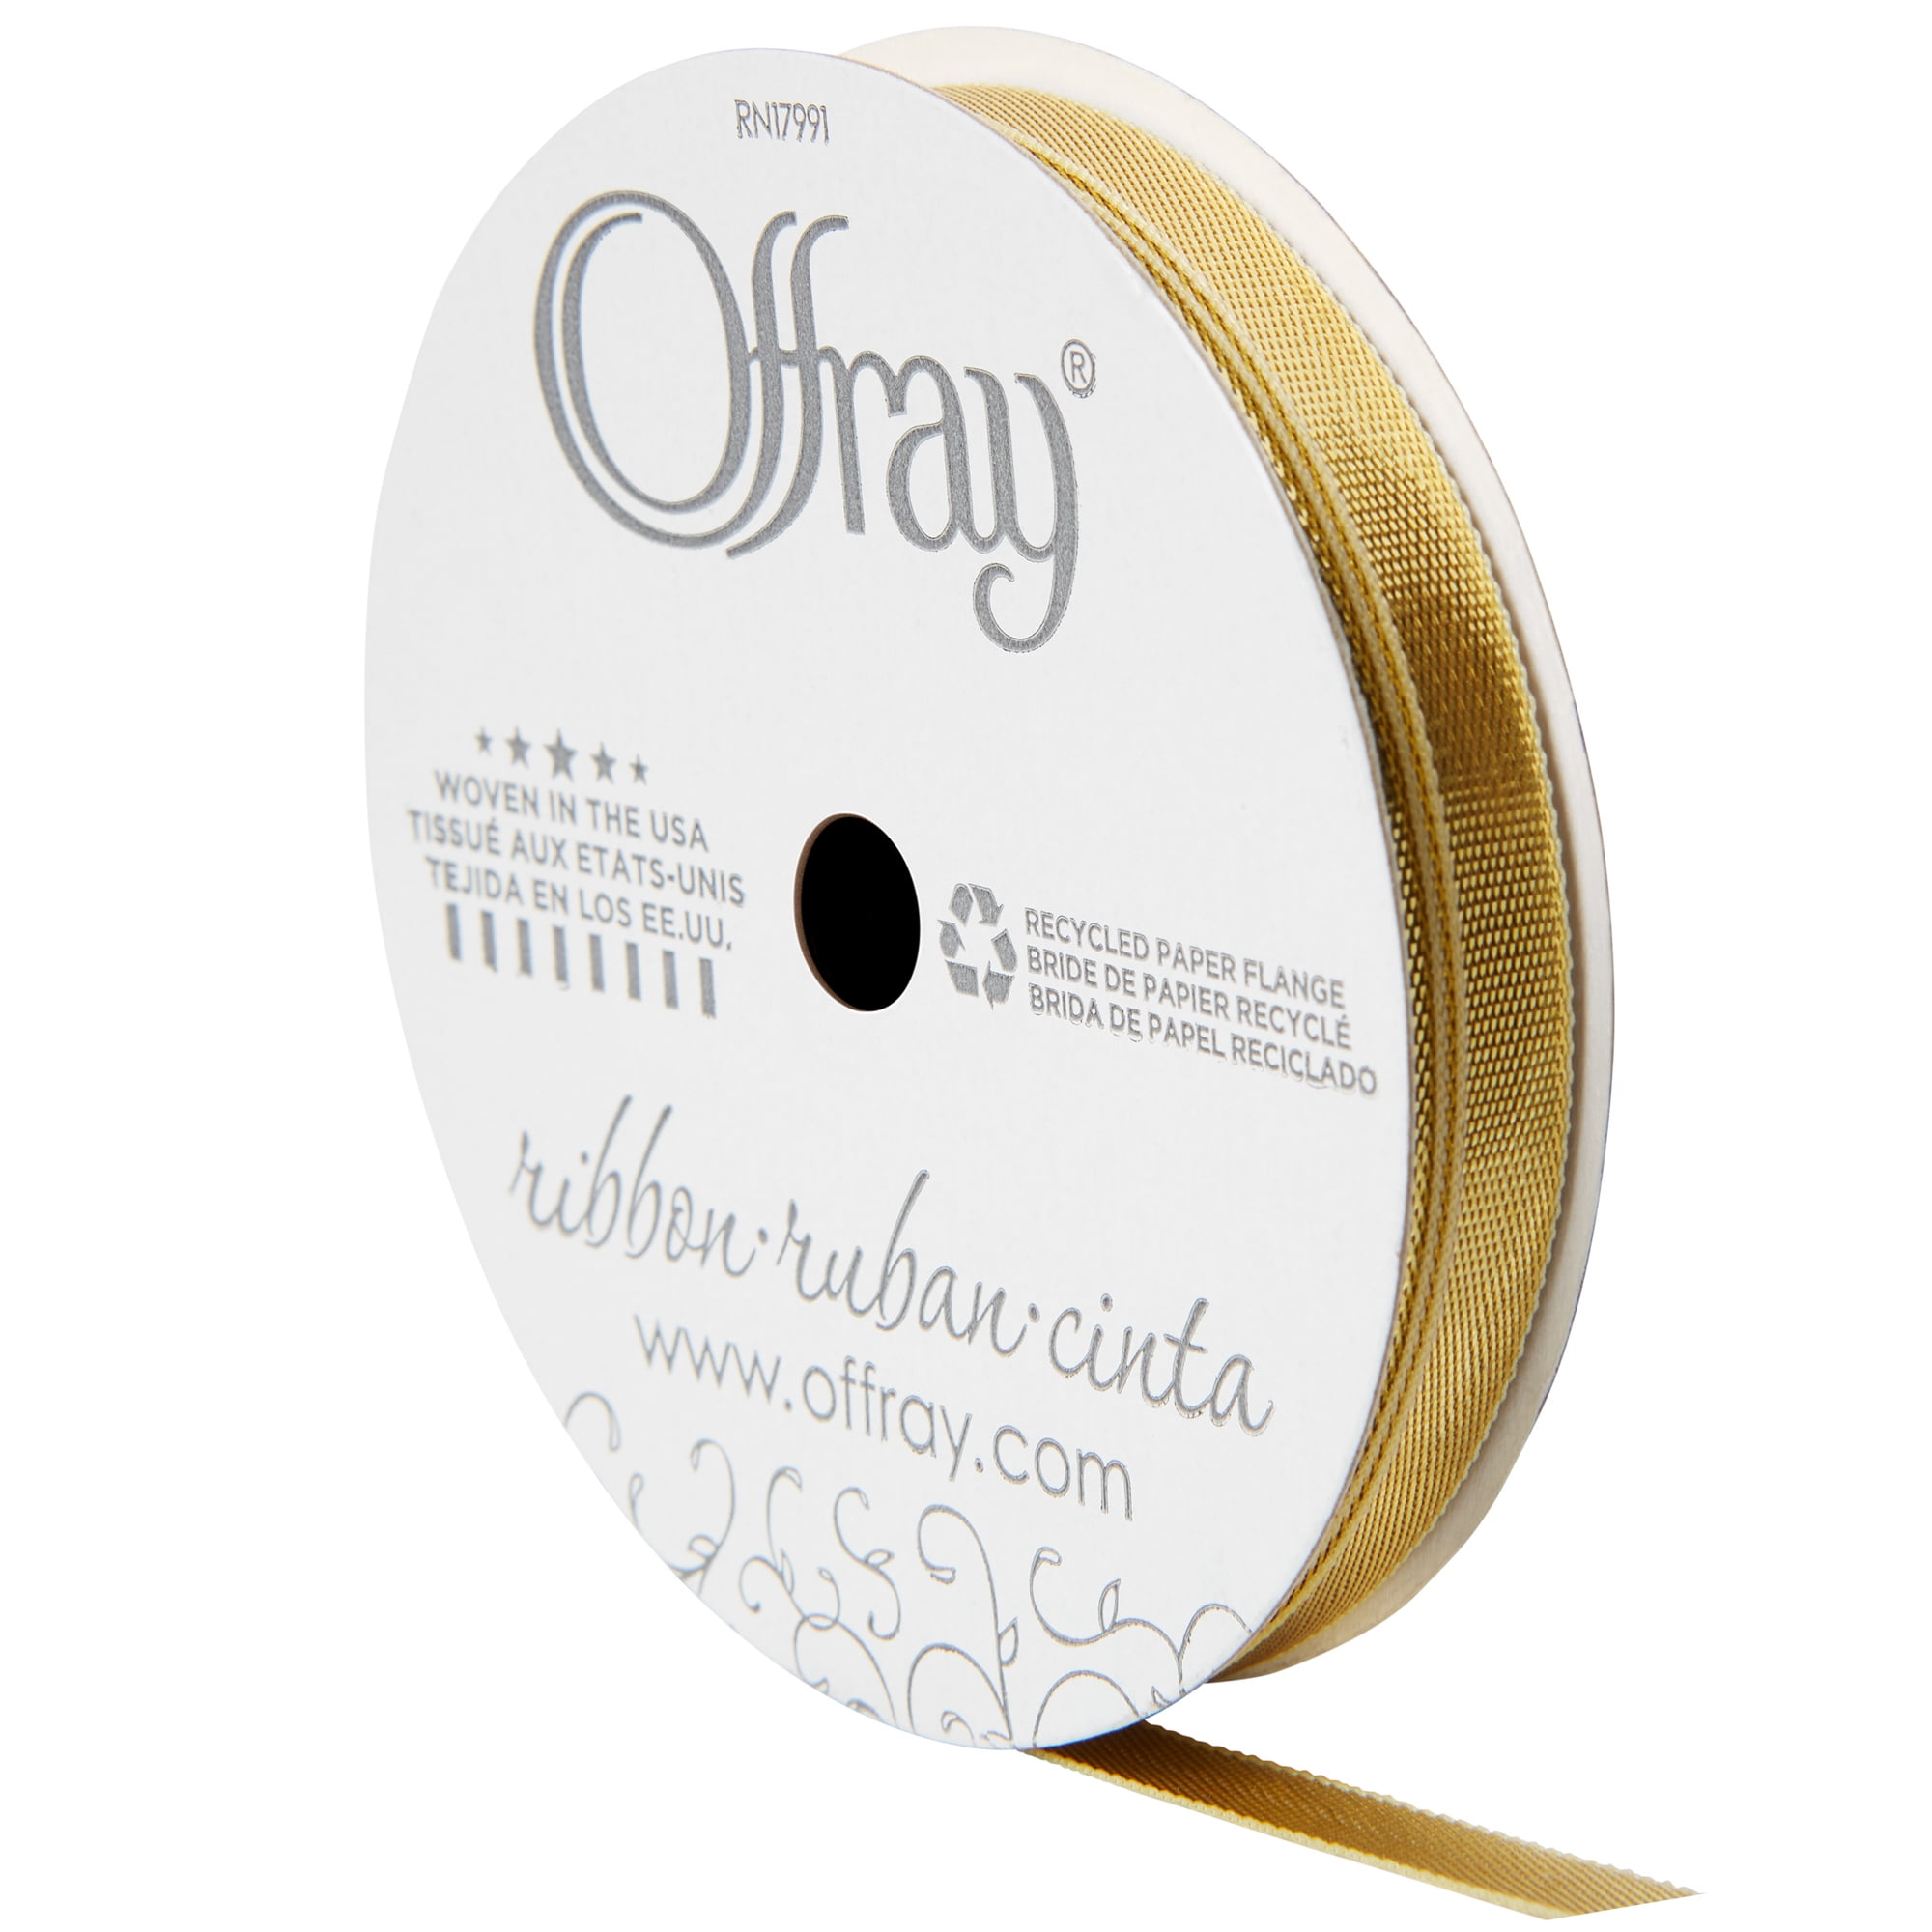 Offray Ribbon, Gold 1/4 inch Metallic Ribbon, 12 feet